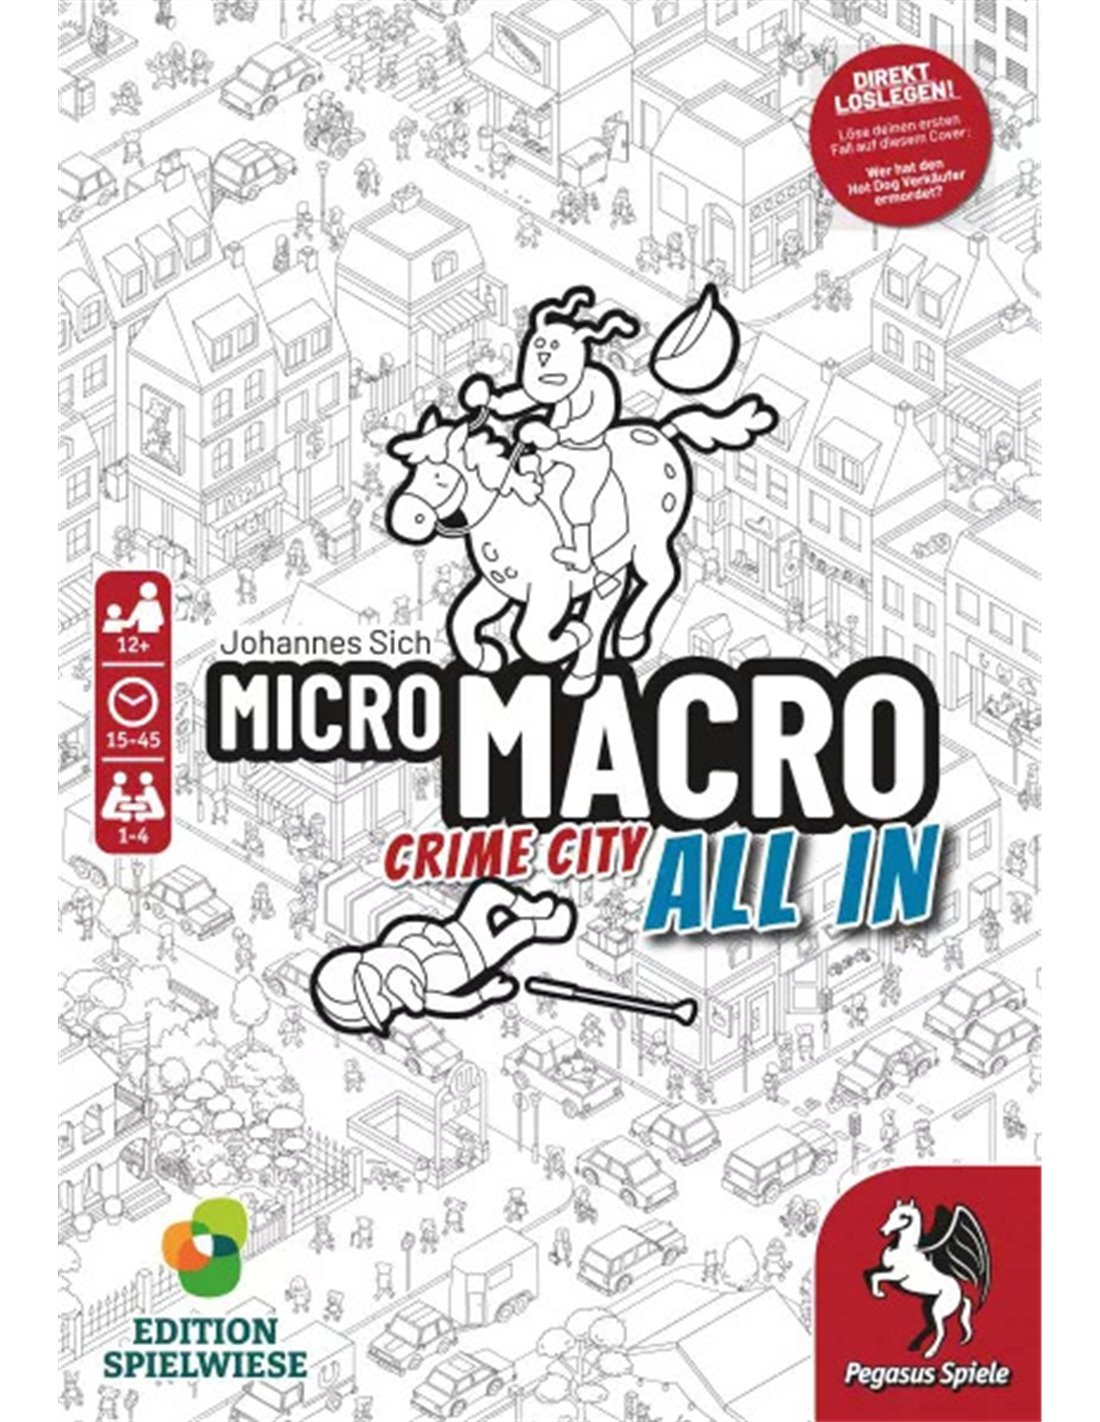 Micro Macro All In - Crime City NL